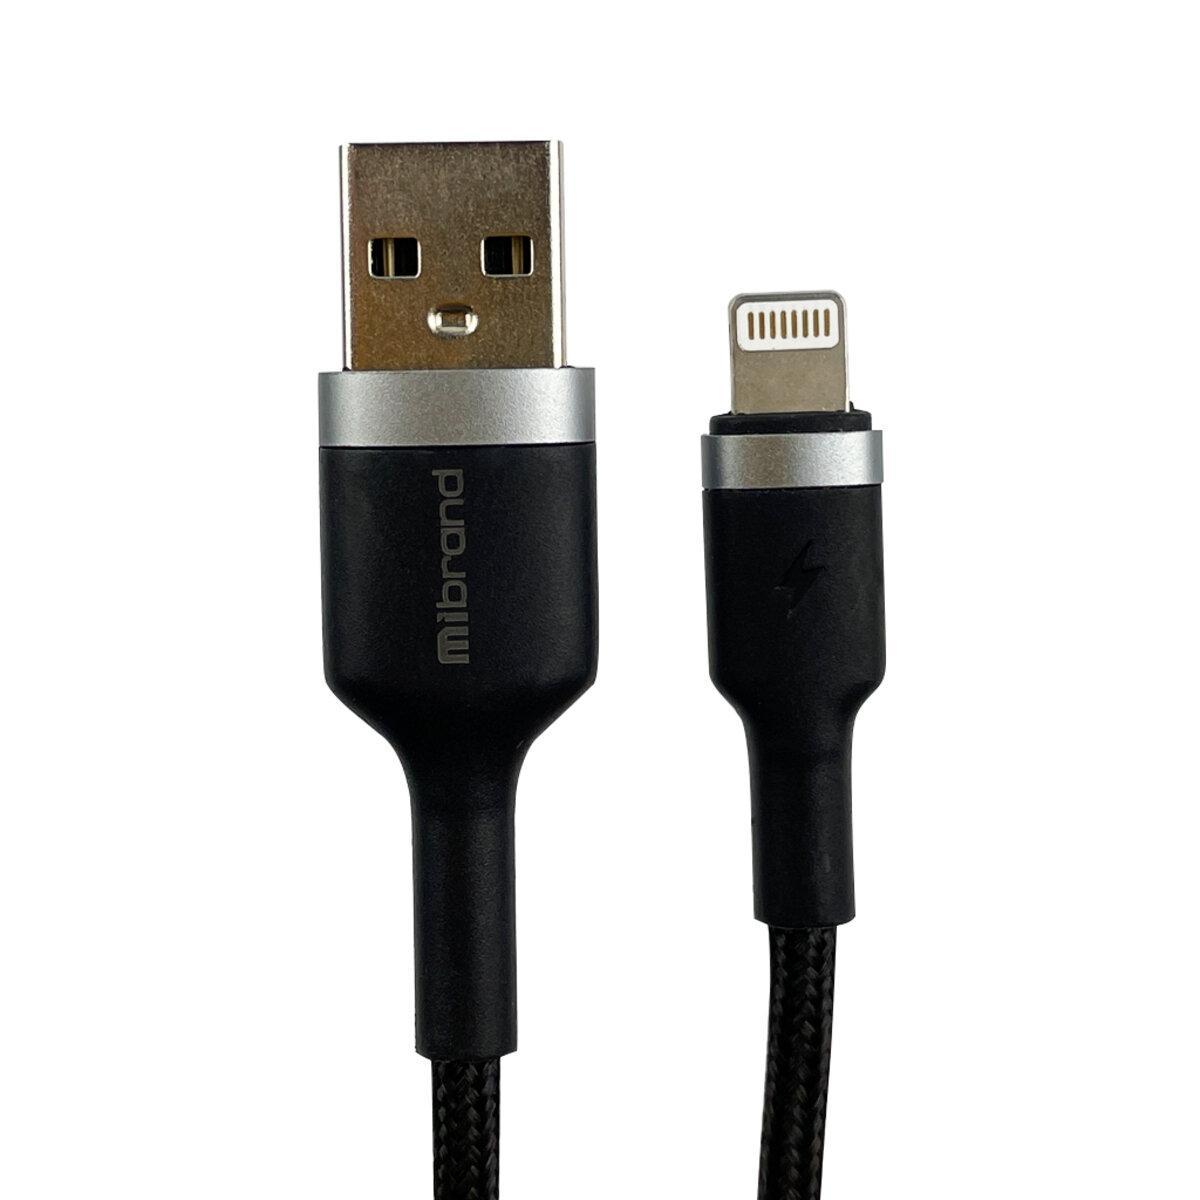 Кабель Mibrand MI-71 Metal Braided  Cable USB for Lightning 2.4A 1m Black